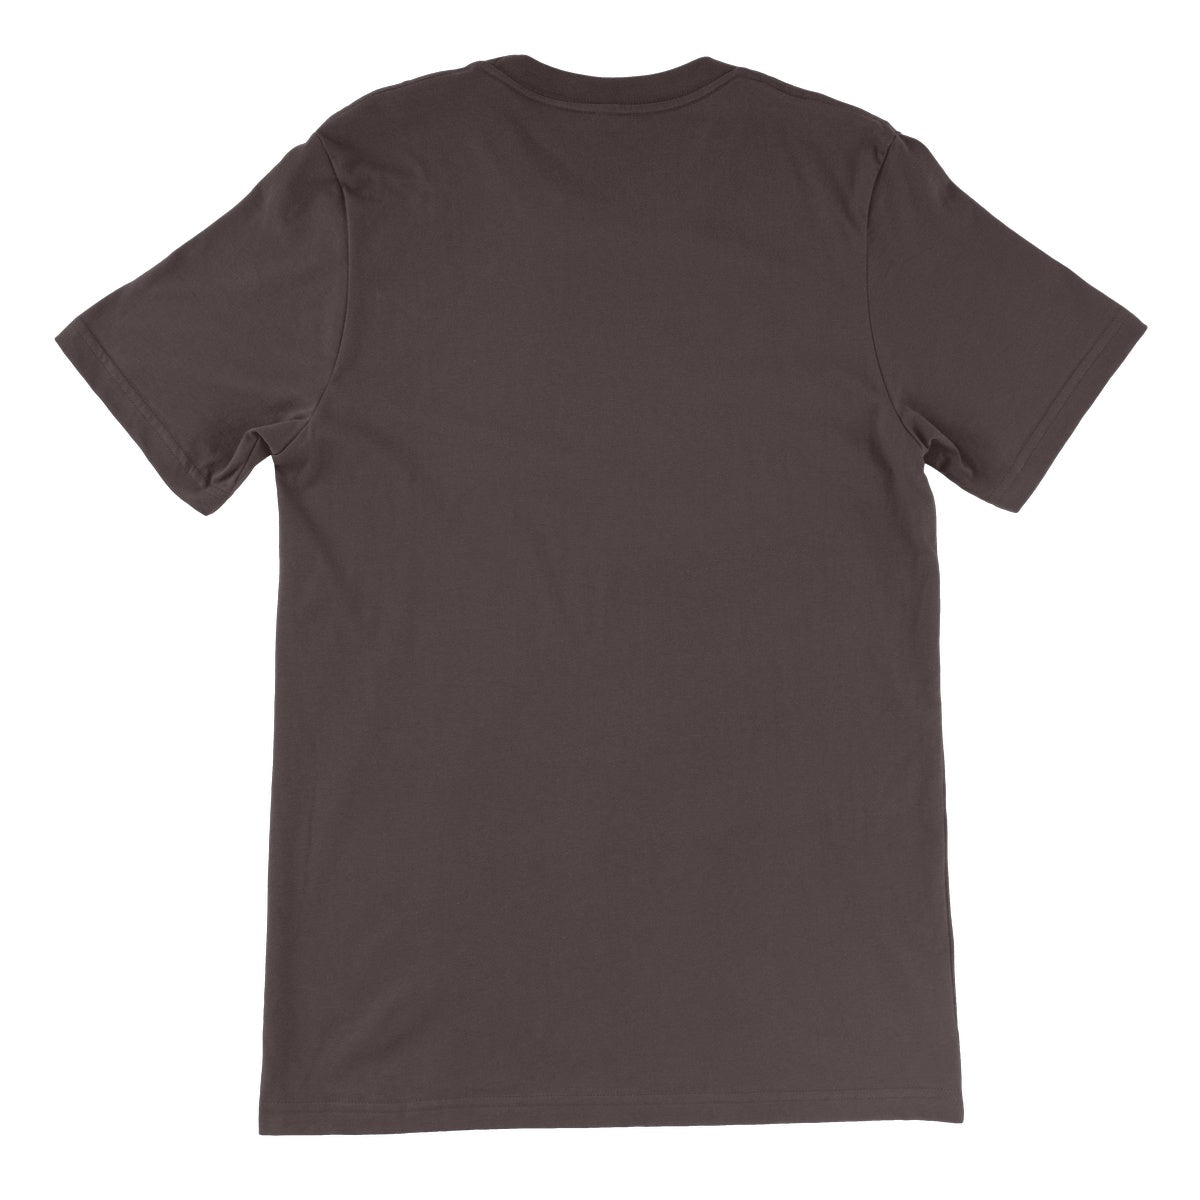 Möbius Flow, Twilight Globe Unisex Short Sleeve T-Shirt